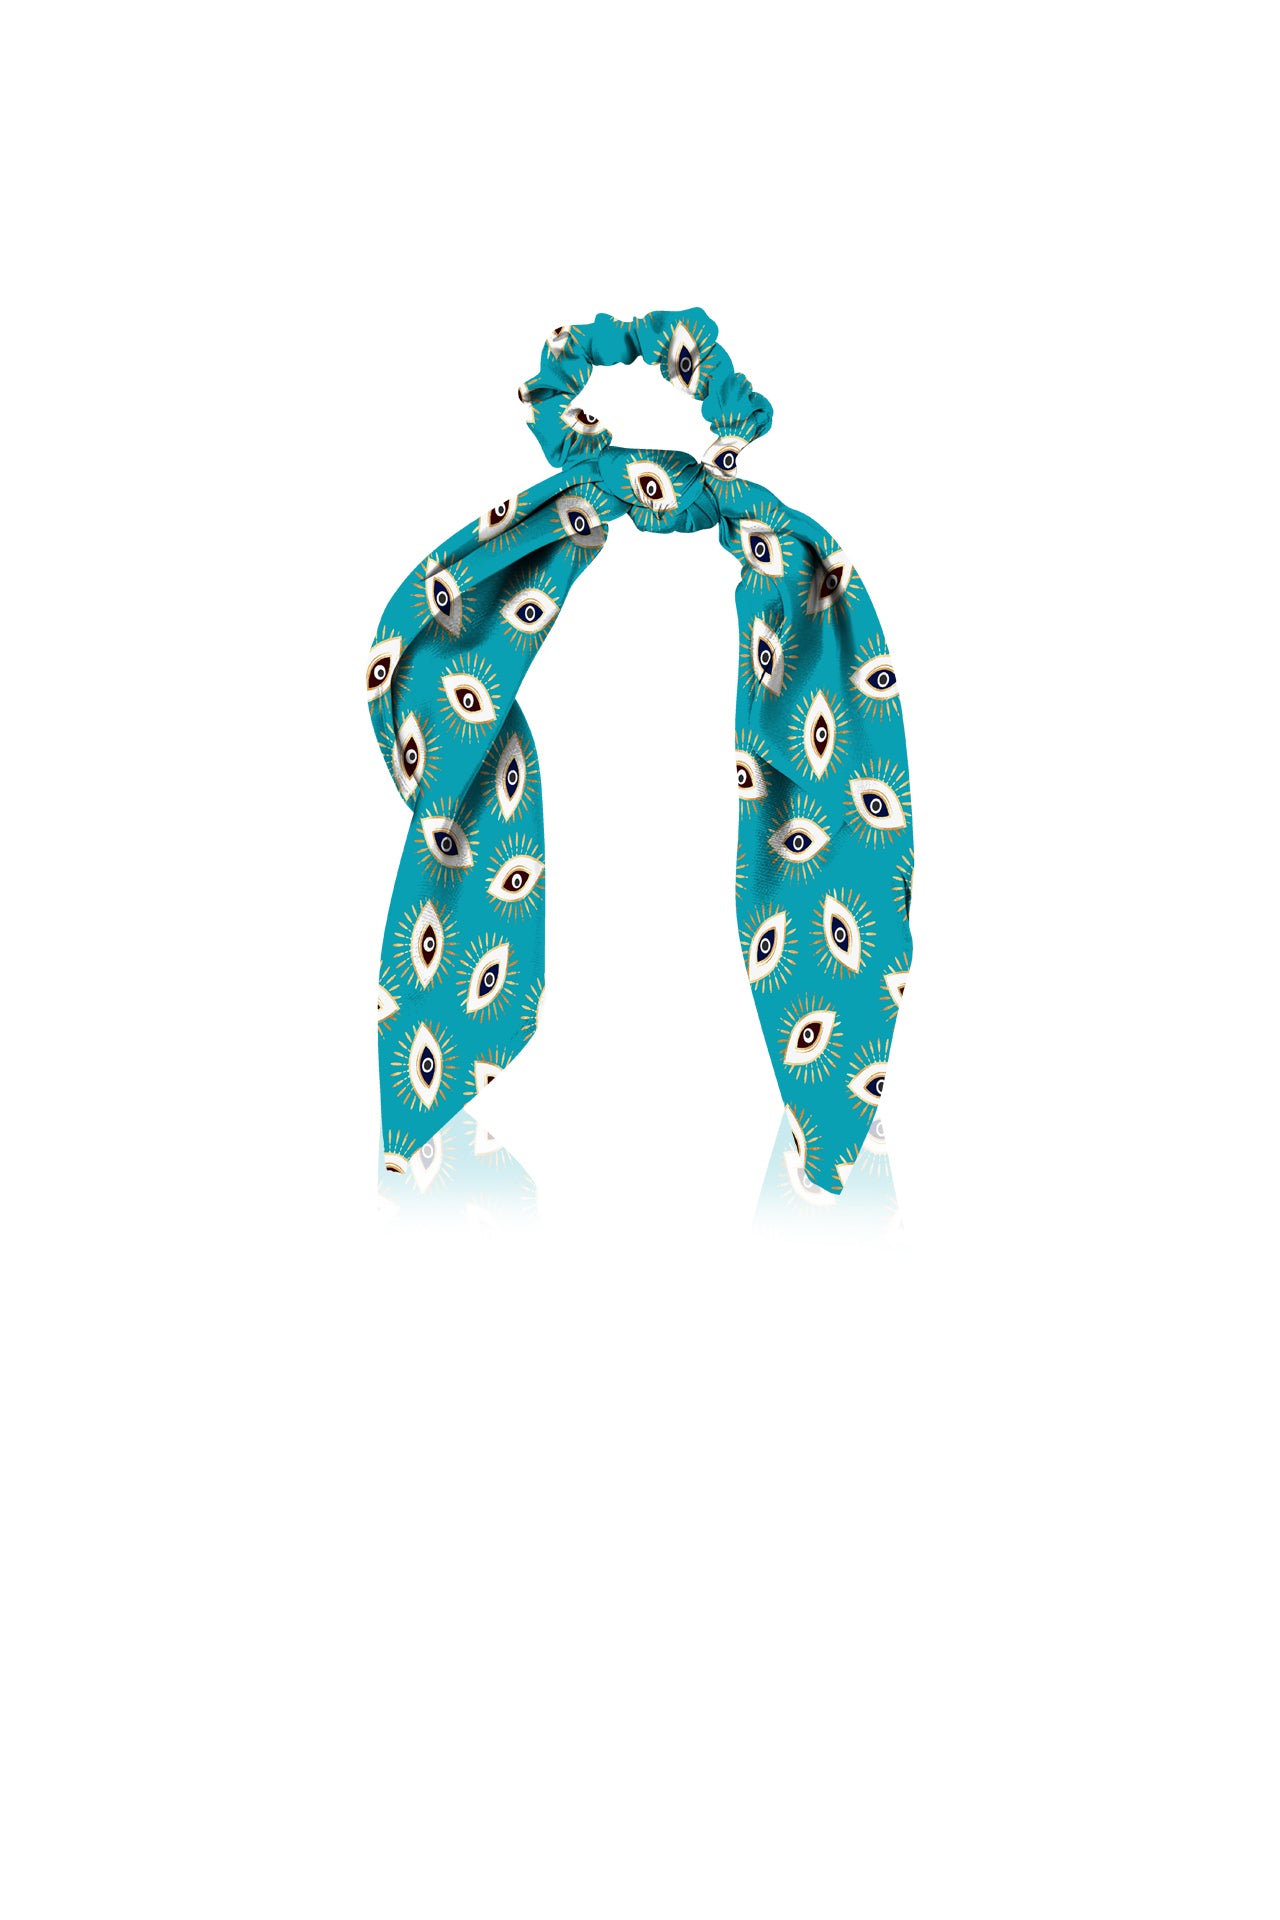 "blue scarf scrunchies" "silk scarf scrunchie" "scrunchie with scarf" "Kyle X Shahida"